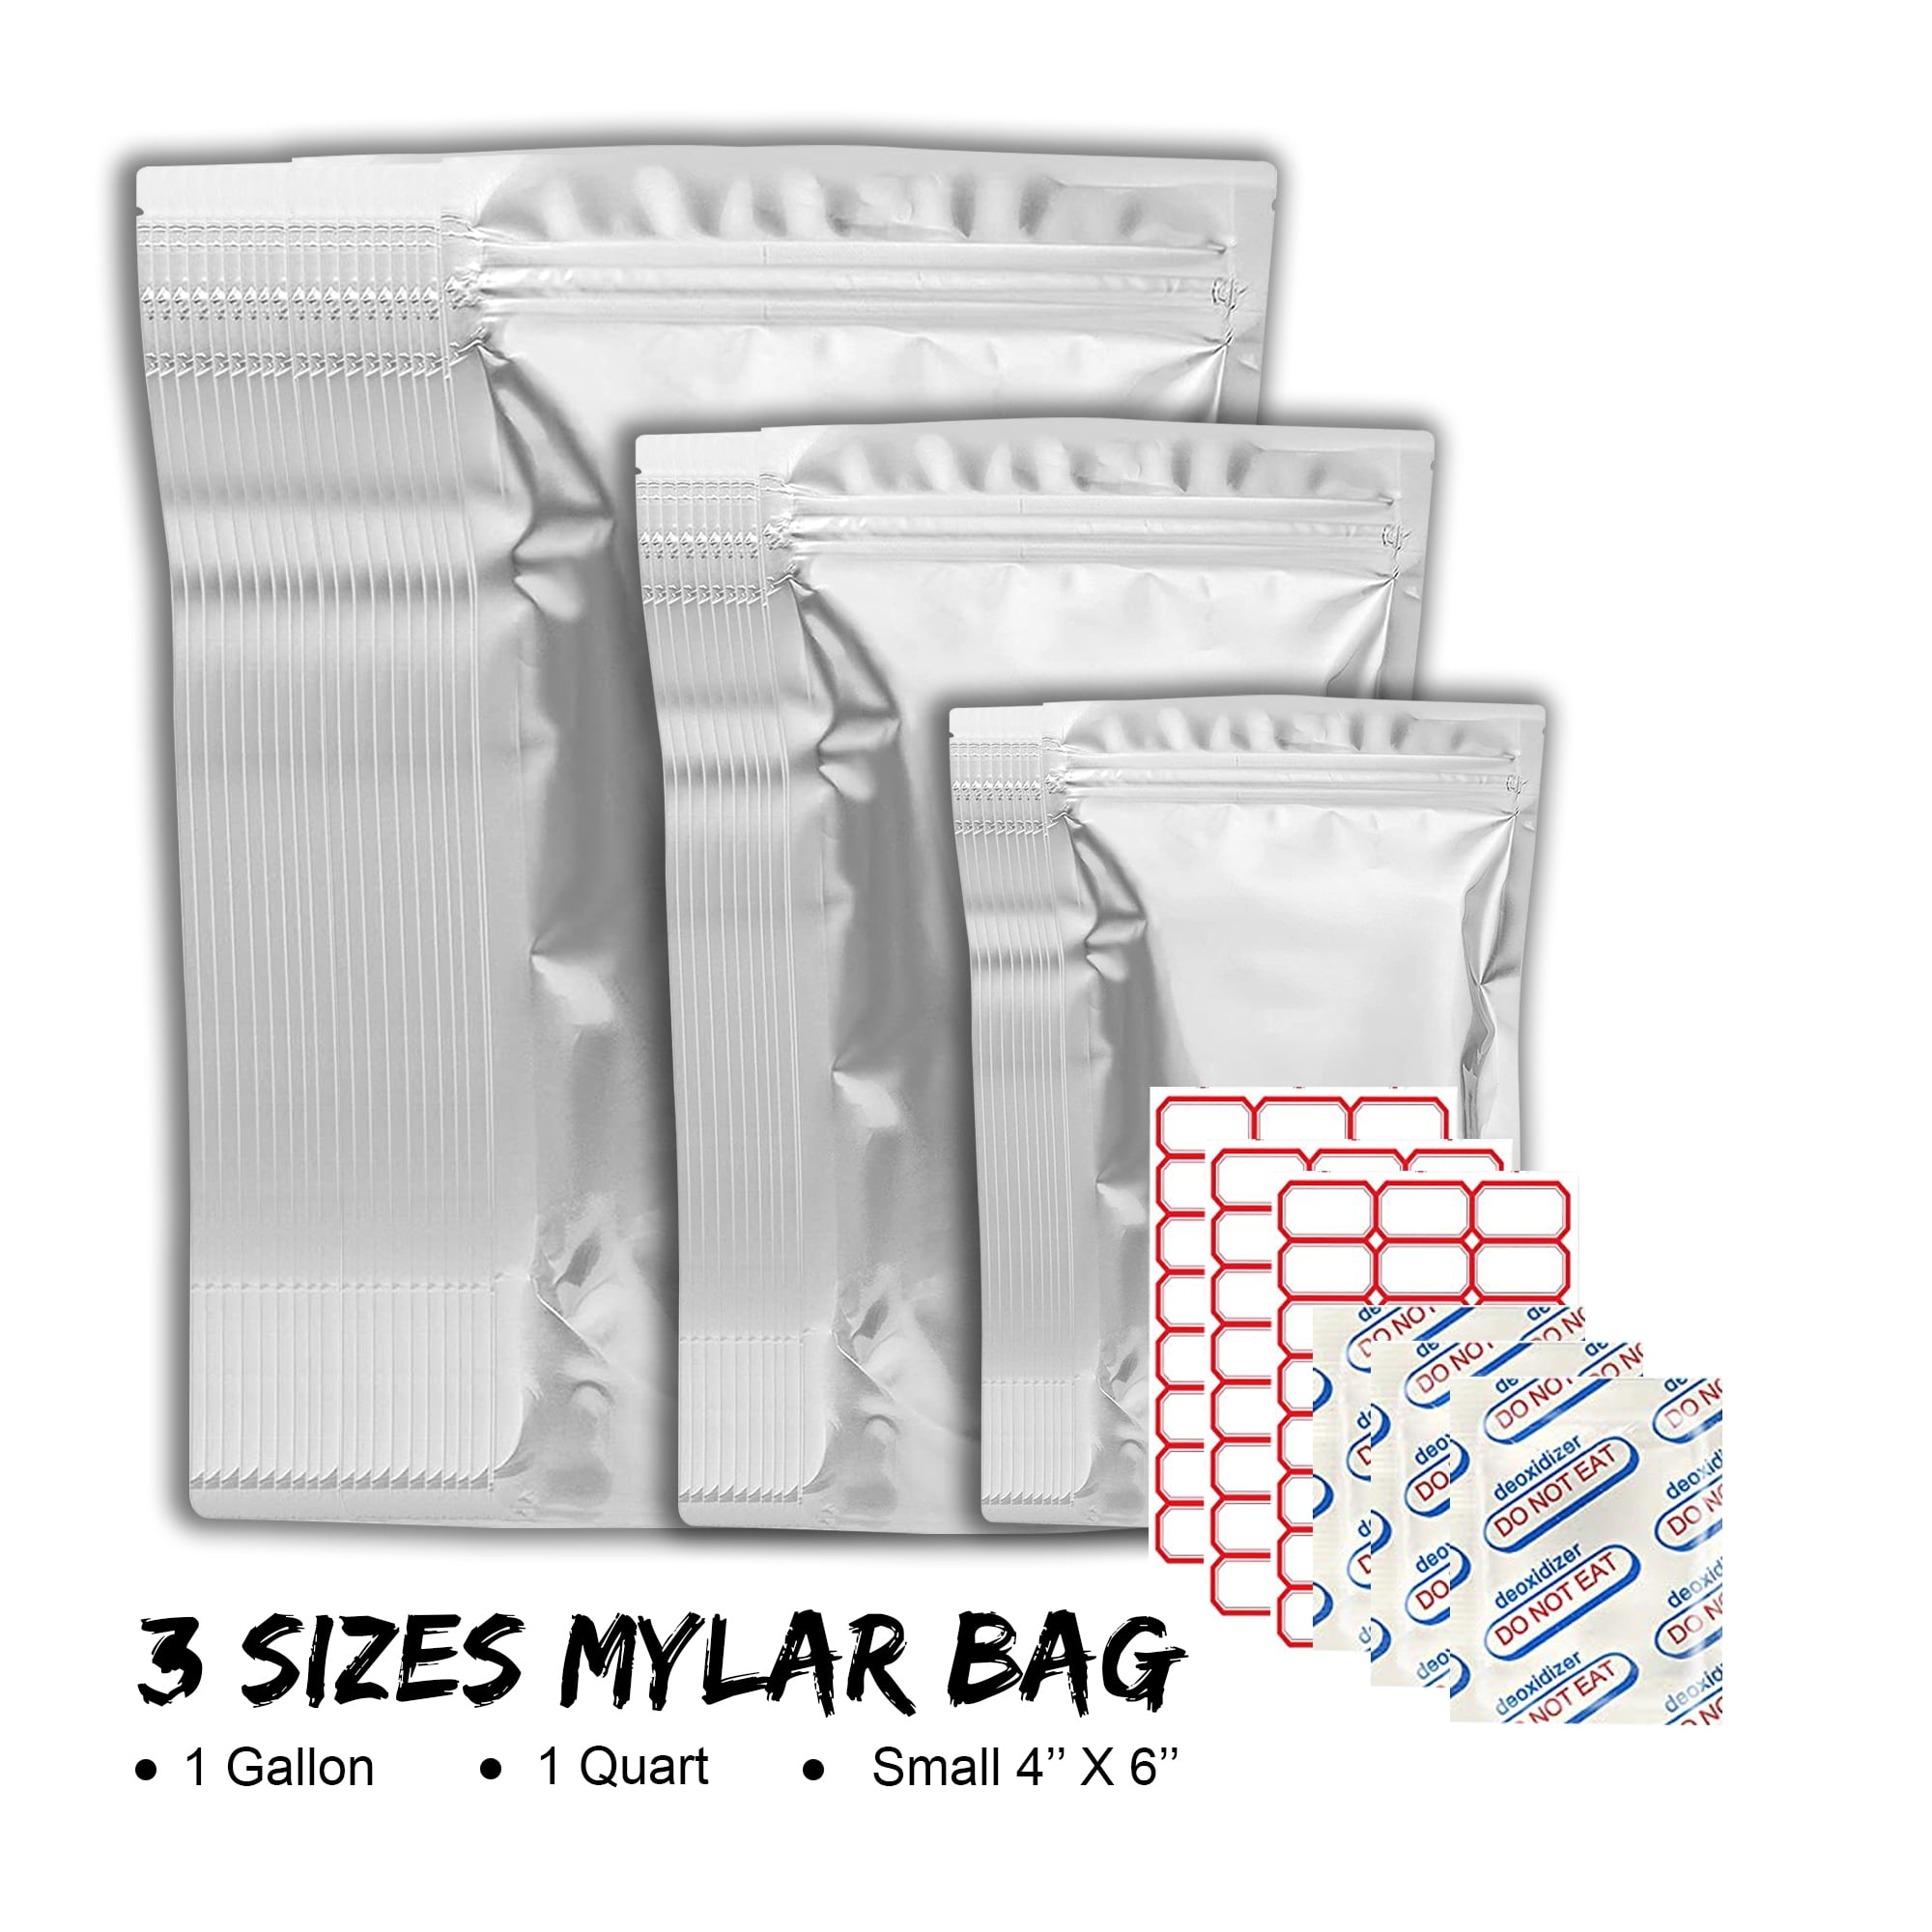 7 MIL 8x12 2 Quart Mylar Bag (Ships free) - Discount Mylar Bags